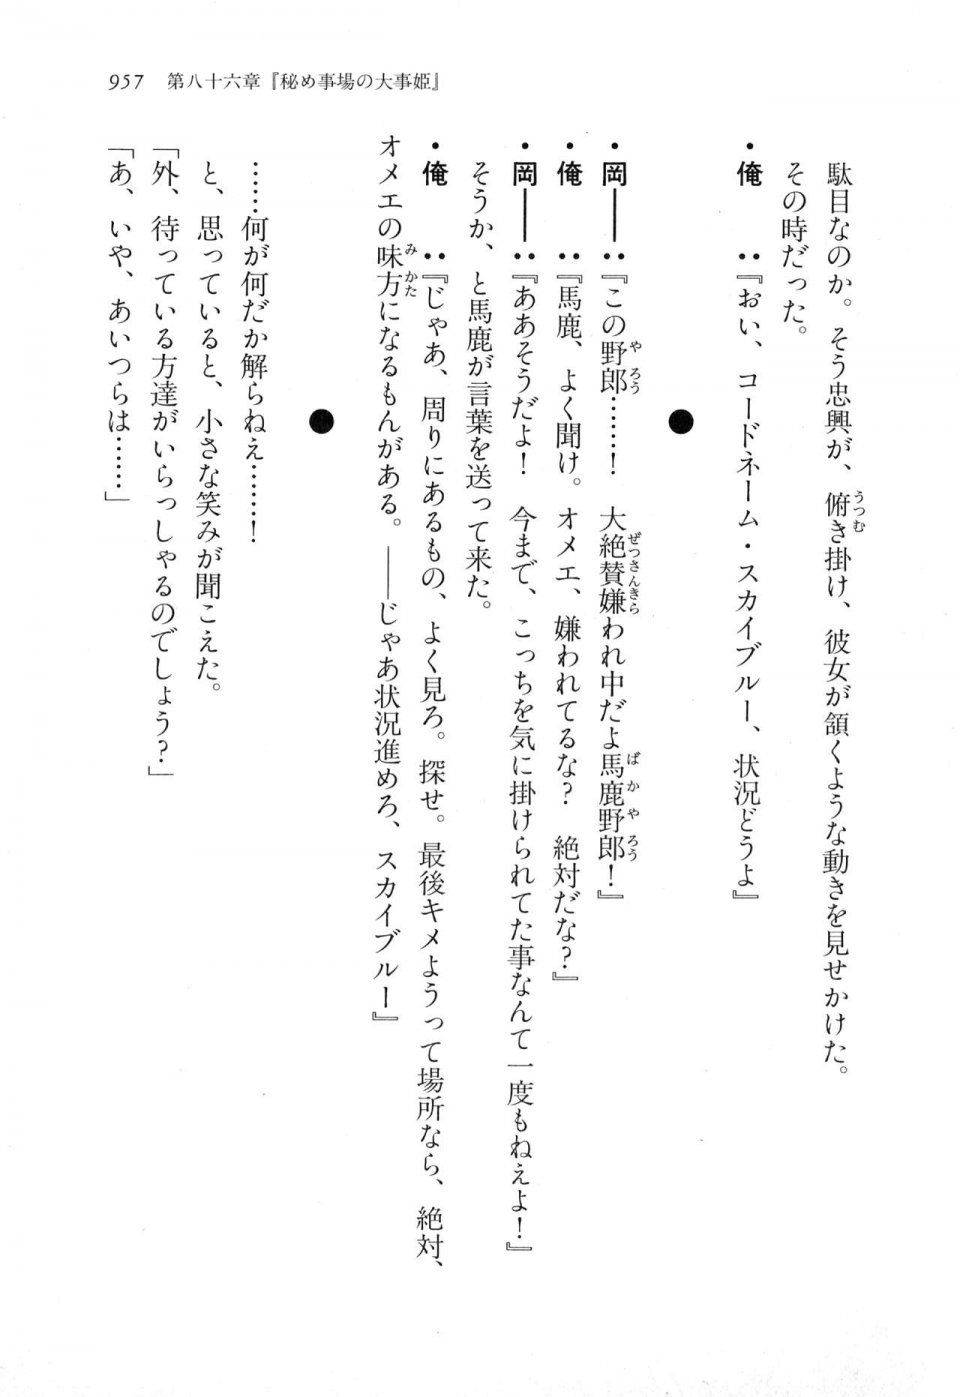 Kyoukai Senjou no Horizon LN Vol 18(7C) Part 2 - Photo #397